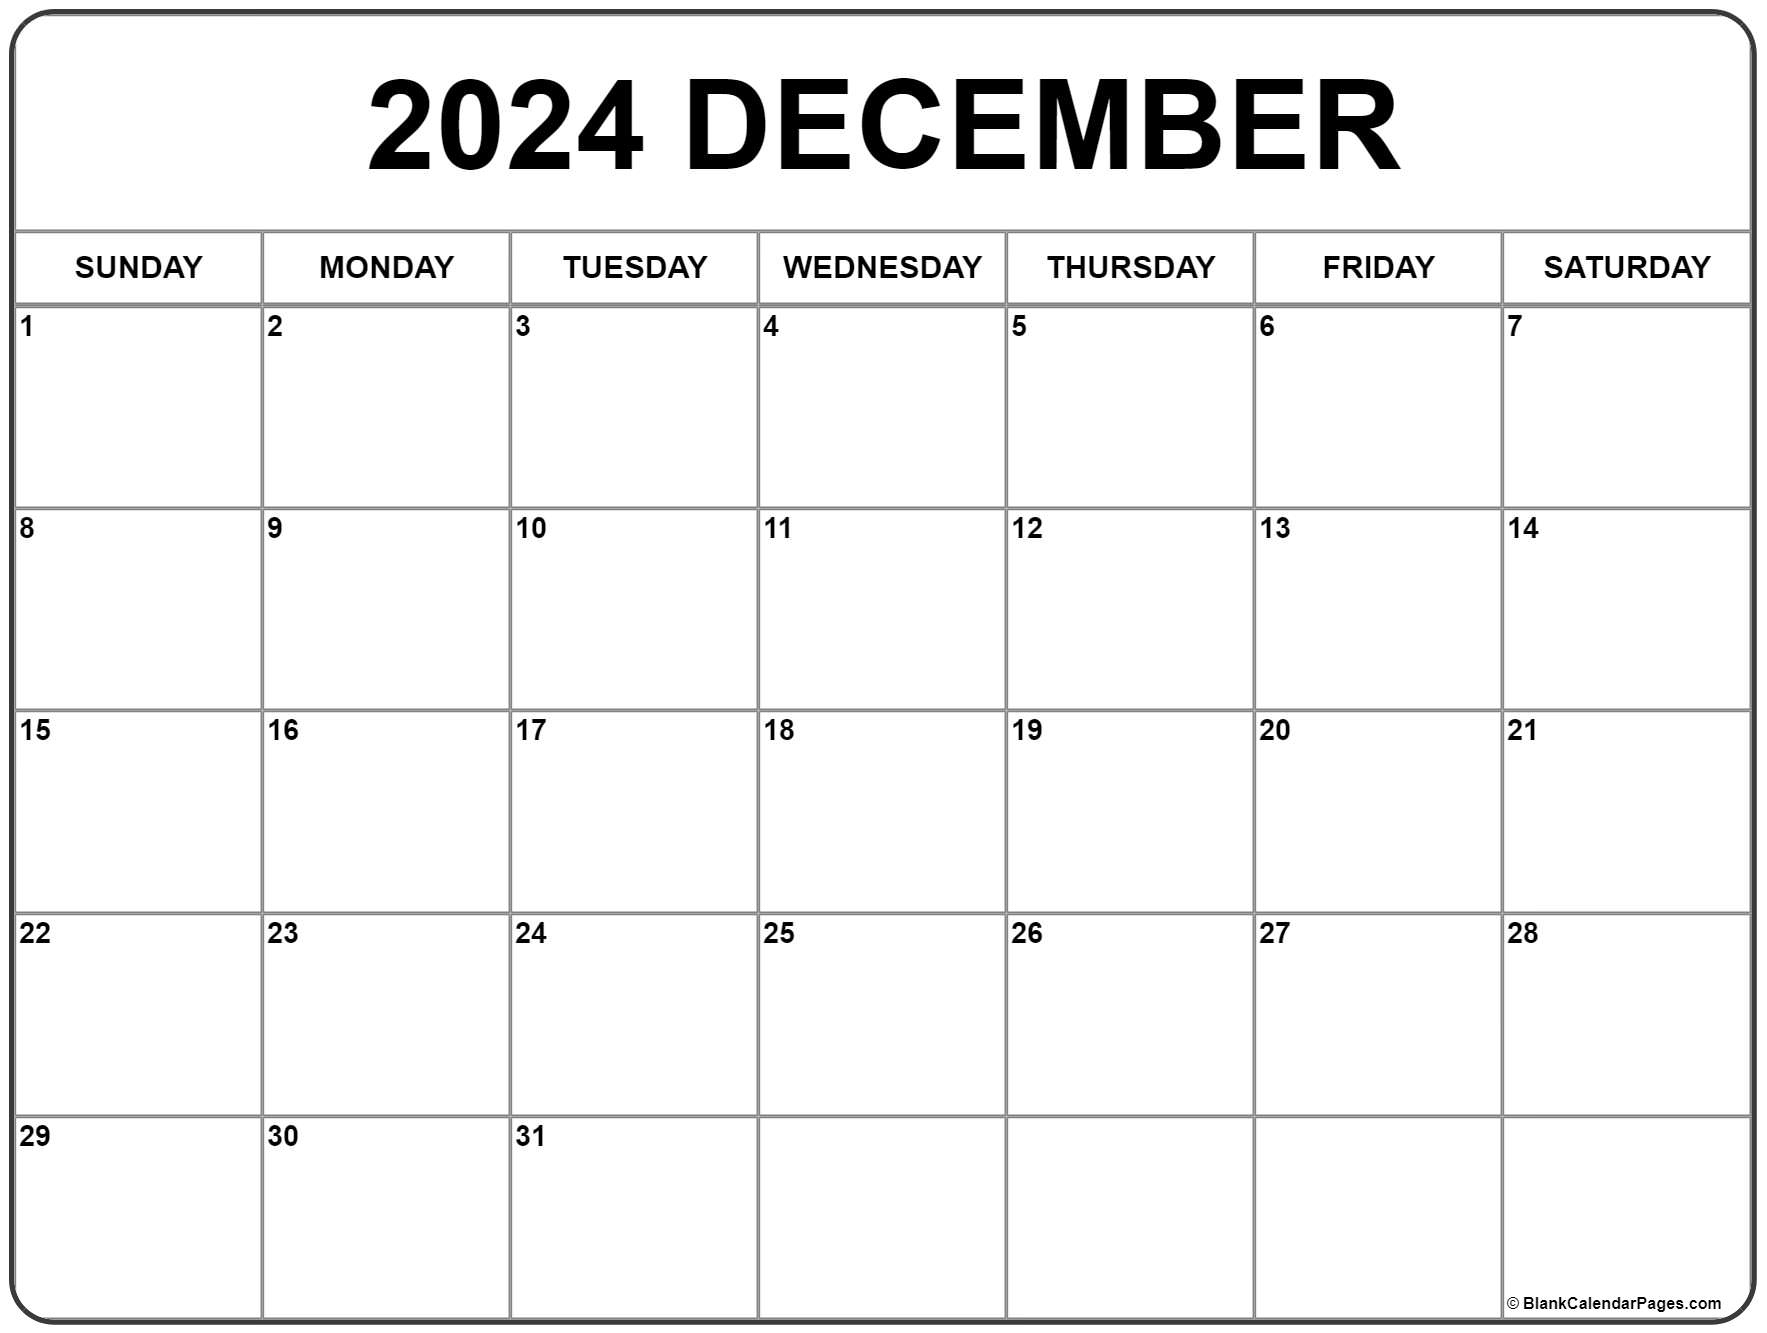 December 2024 Calendar | Free Printable Calendar with Free Printable Appointment Calendar December 2024